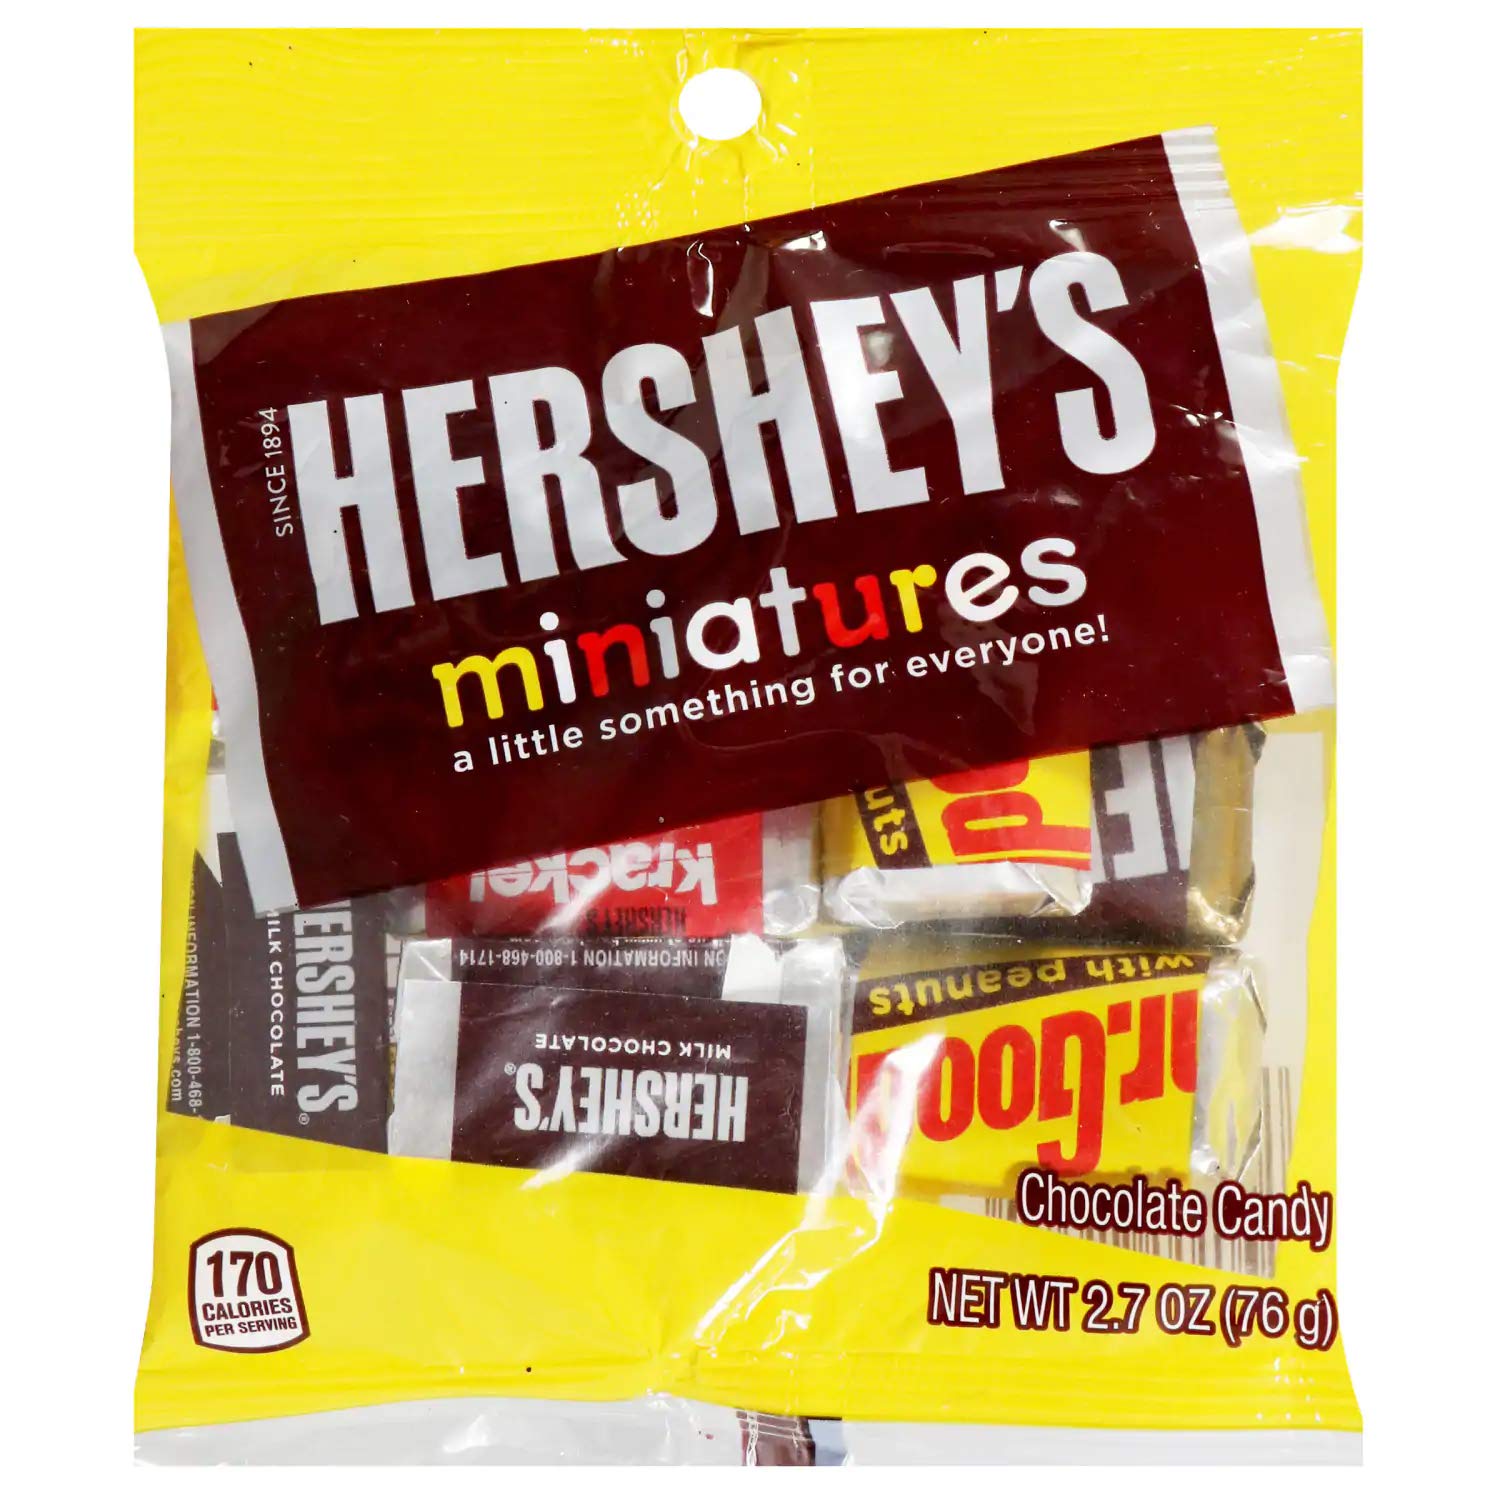  Hershey (1) Bag Miniatures Assorted Mini Candy Bars - Mr. Goodbar, Krackel, Hersheys Milk Chocolate, Hersheys Special Dark - Individually Wrapped Candy Bars - Net Wt. 2.7 oz